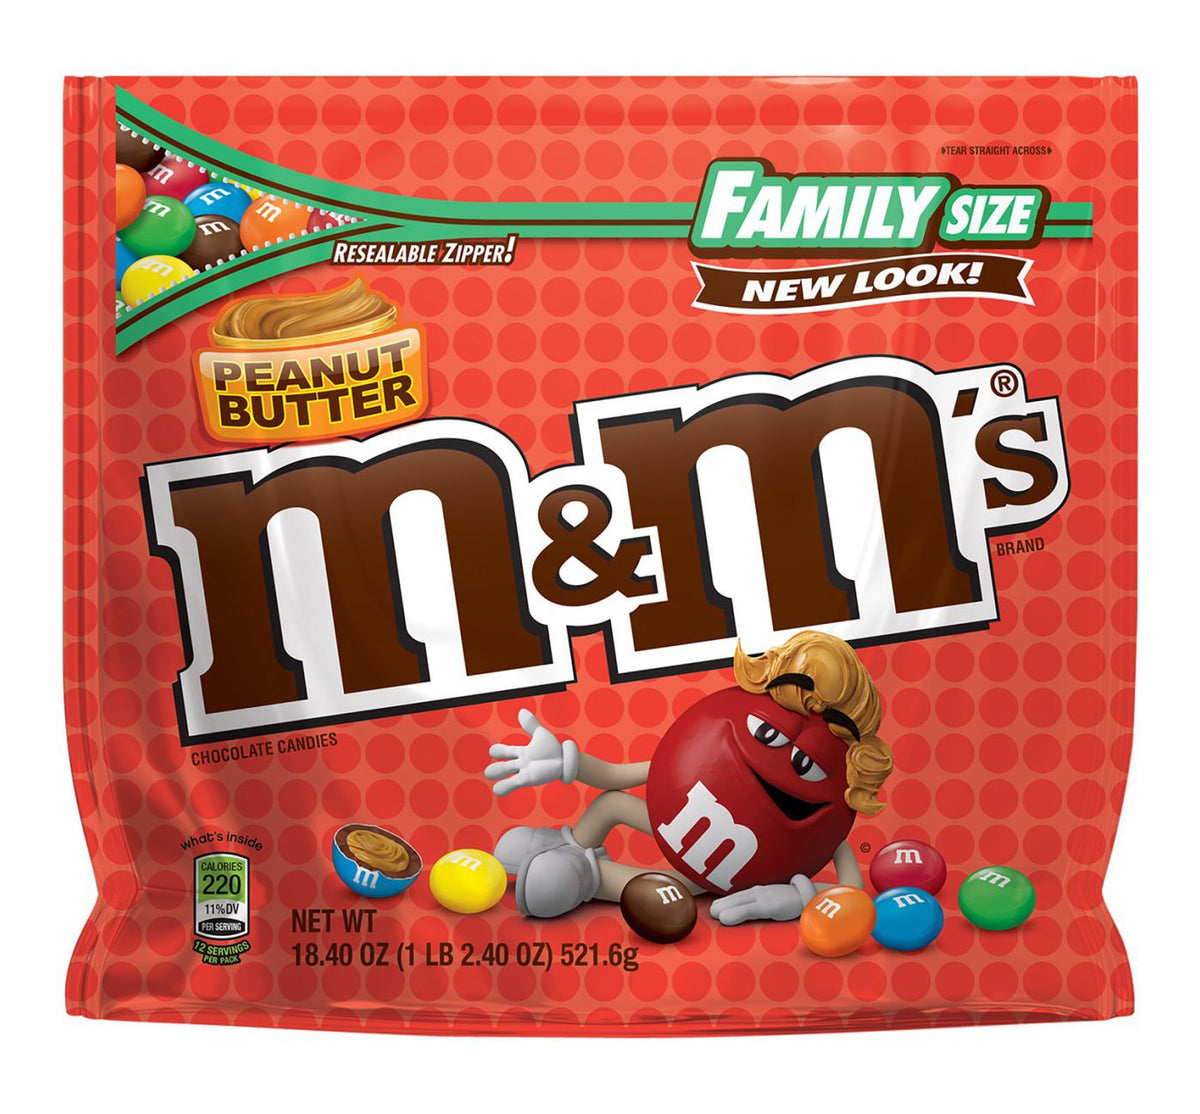 M&M's Chocolate Candies Caramel Family Size (18.4 oz)